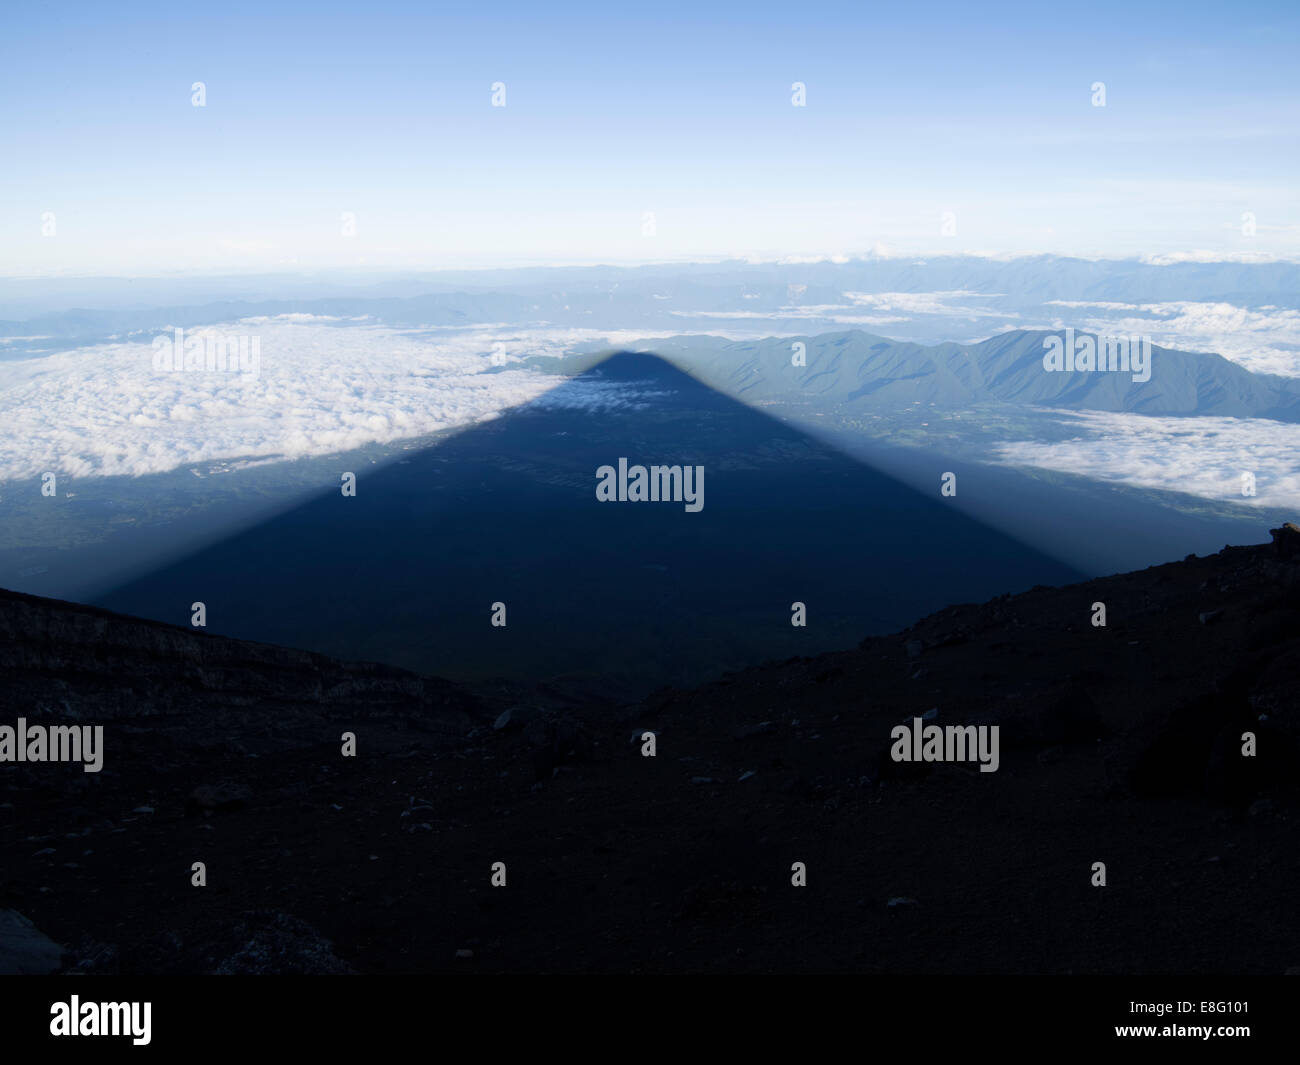 Klettern Mt. Fuji, JAPAN - Blick auf Fuji Schatten vom Gipfel des Mt. Fuji in der Morgendämmerung. Stockfoto